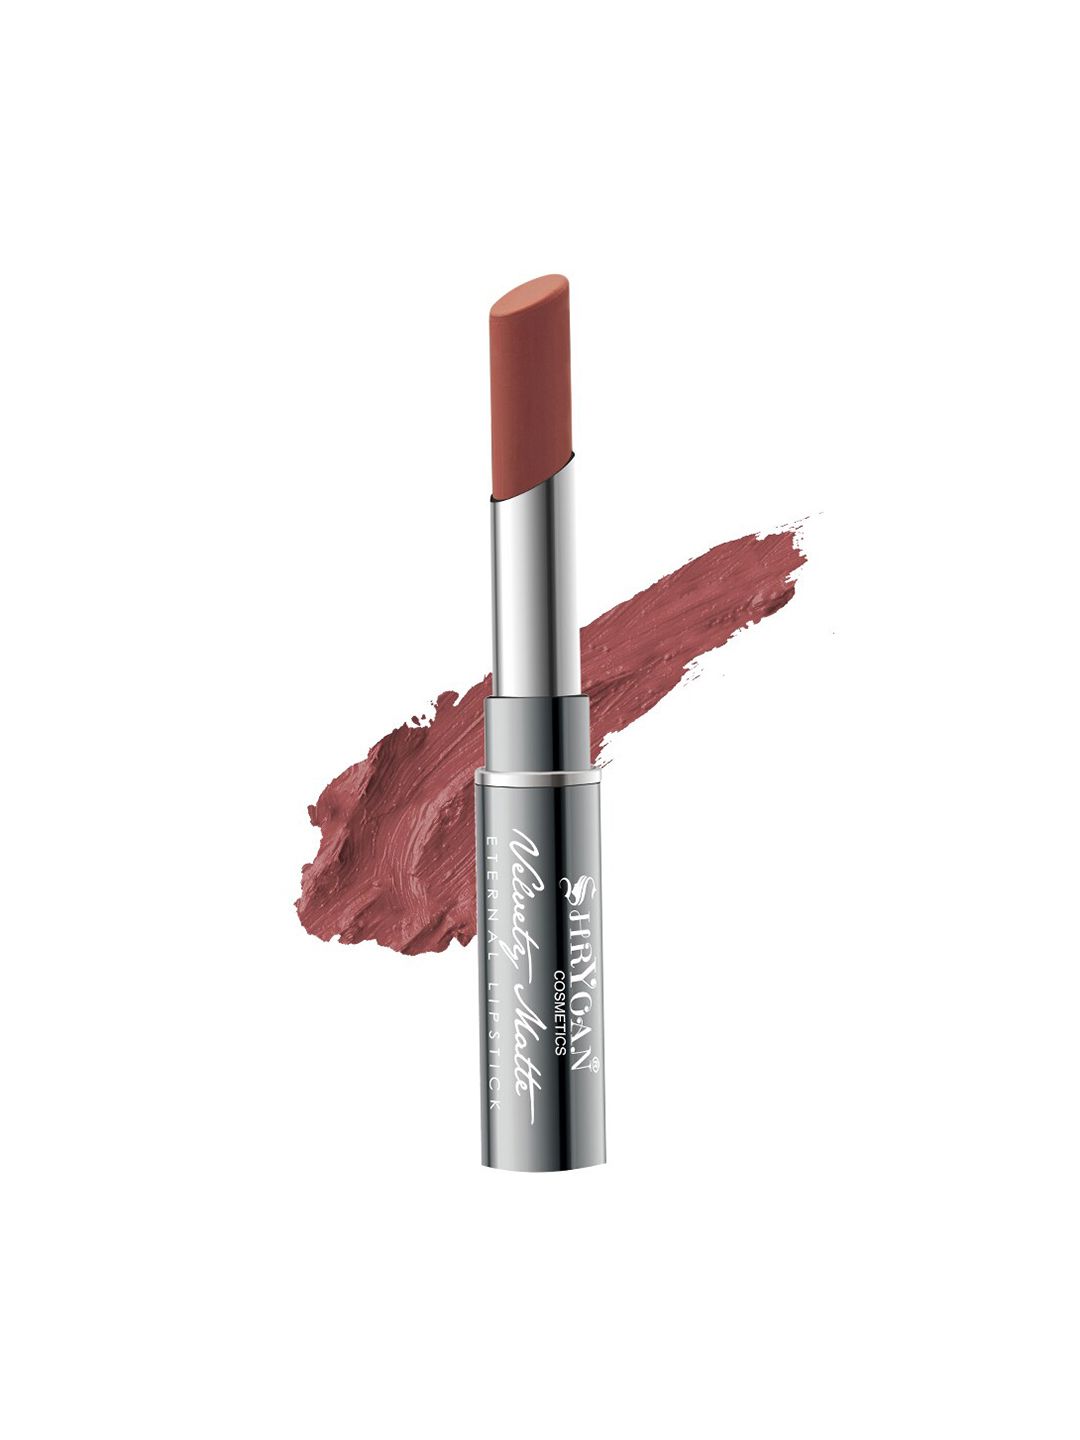 SHRYOAN Velvety Matte Non-Transfer Eternal Lipstick - Rain Kiss 13 Price in India